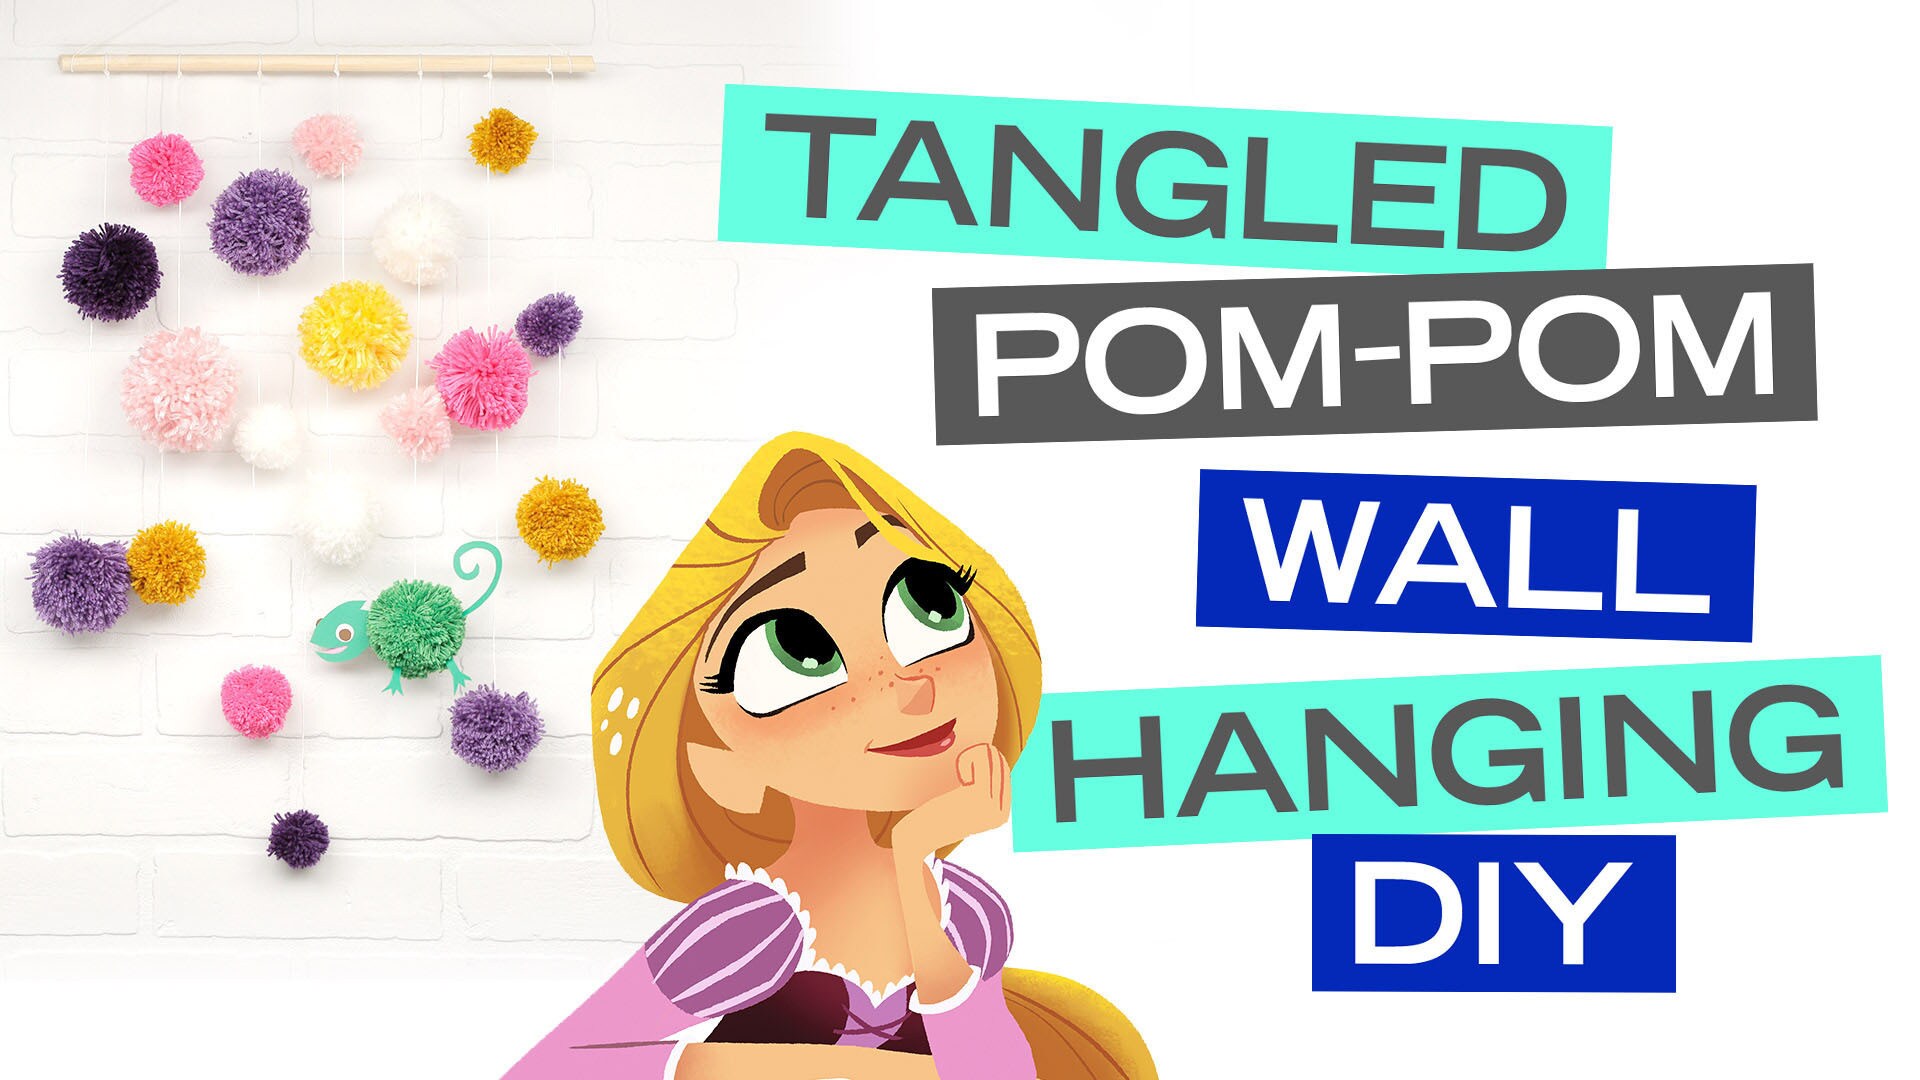 Disney Style: Tangled Pom-Pom Wall Hanging DIY